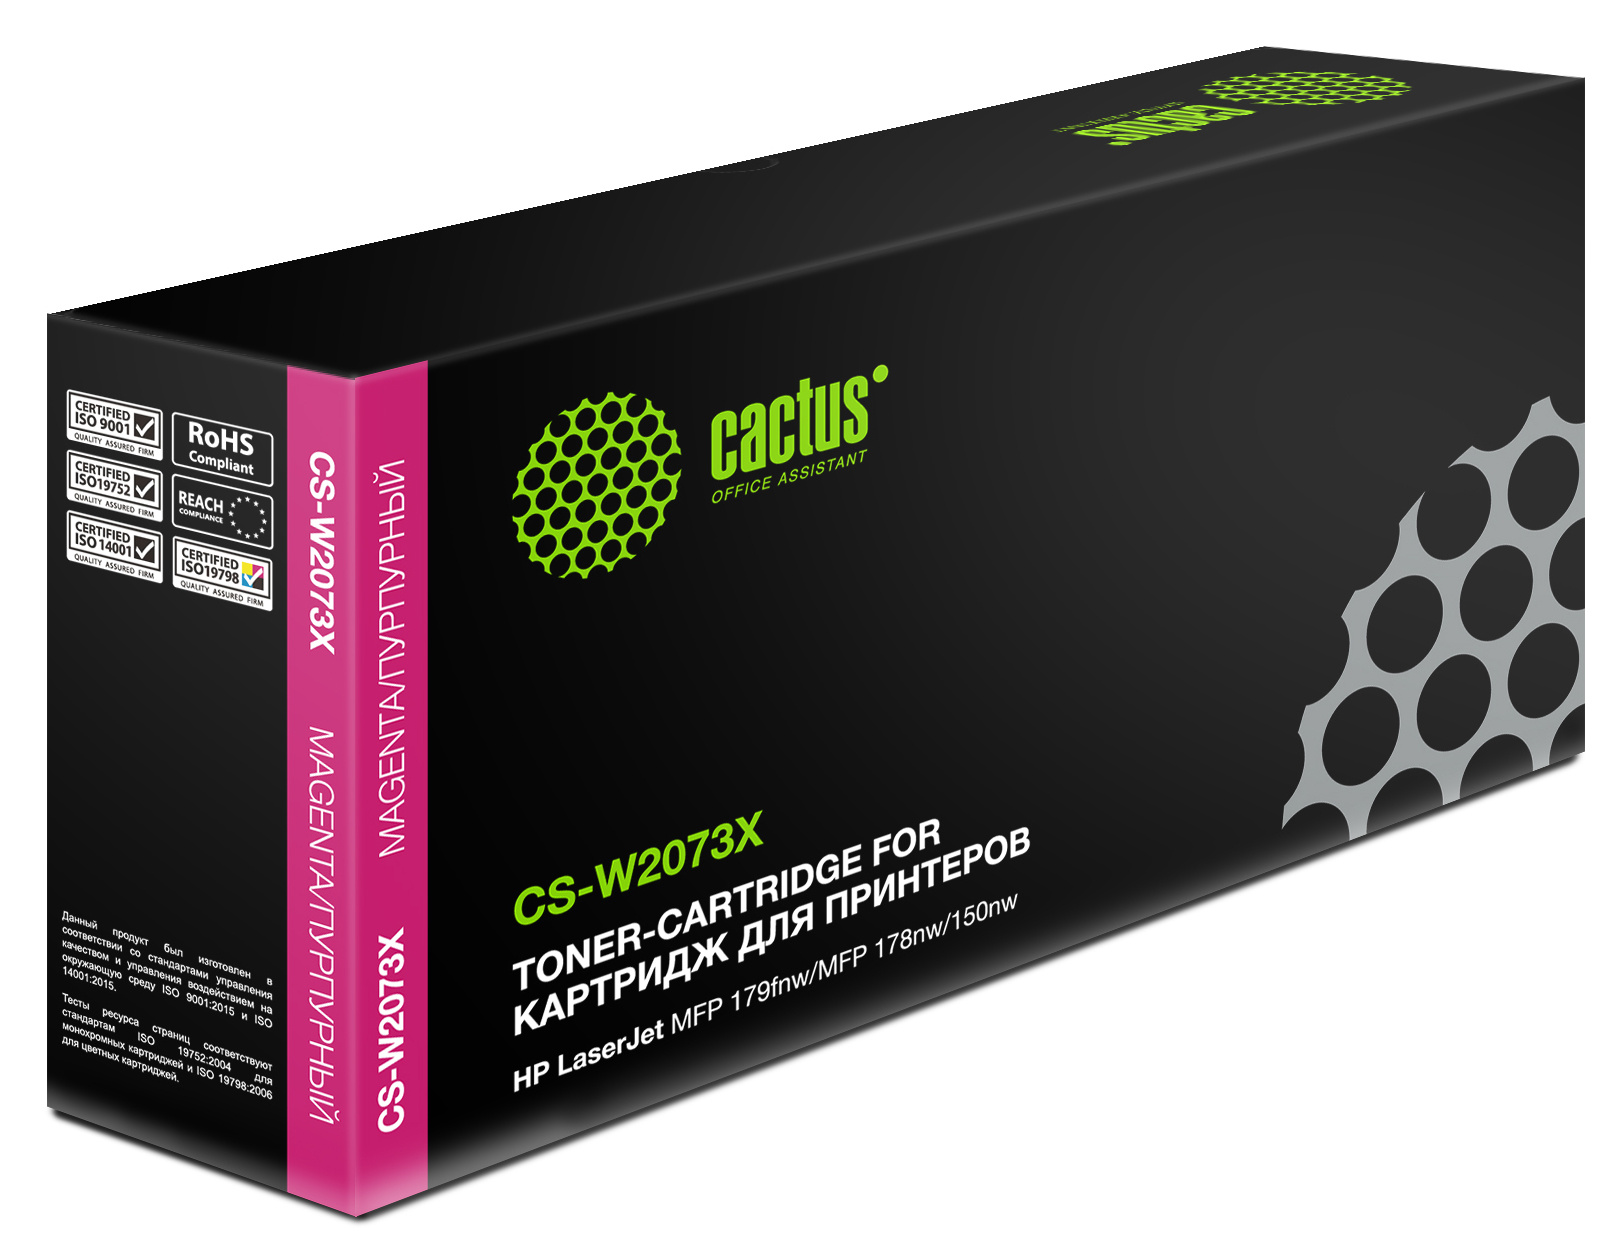   Cactus CS-W2073X W2073X (   )  (1300.)  HP Color Laser 150a/150nw/178nw MFP/179fnw MFP